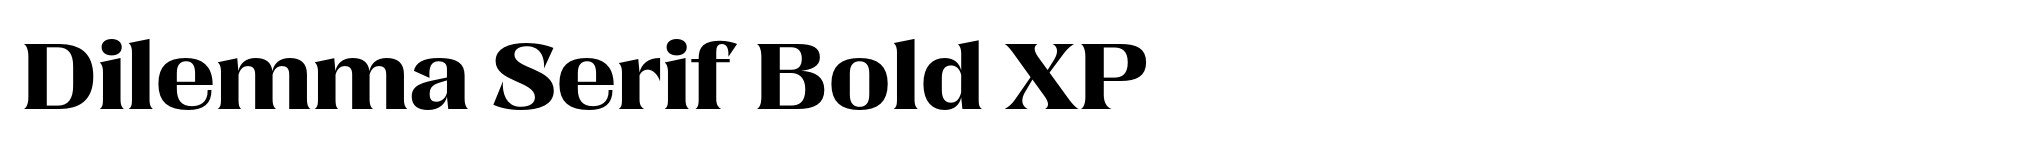 Dilemma Serif Bold XP image